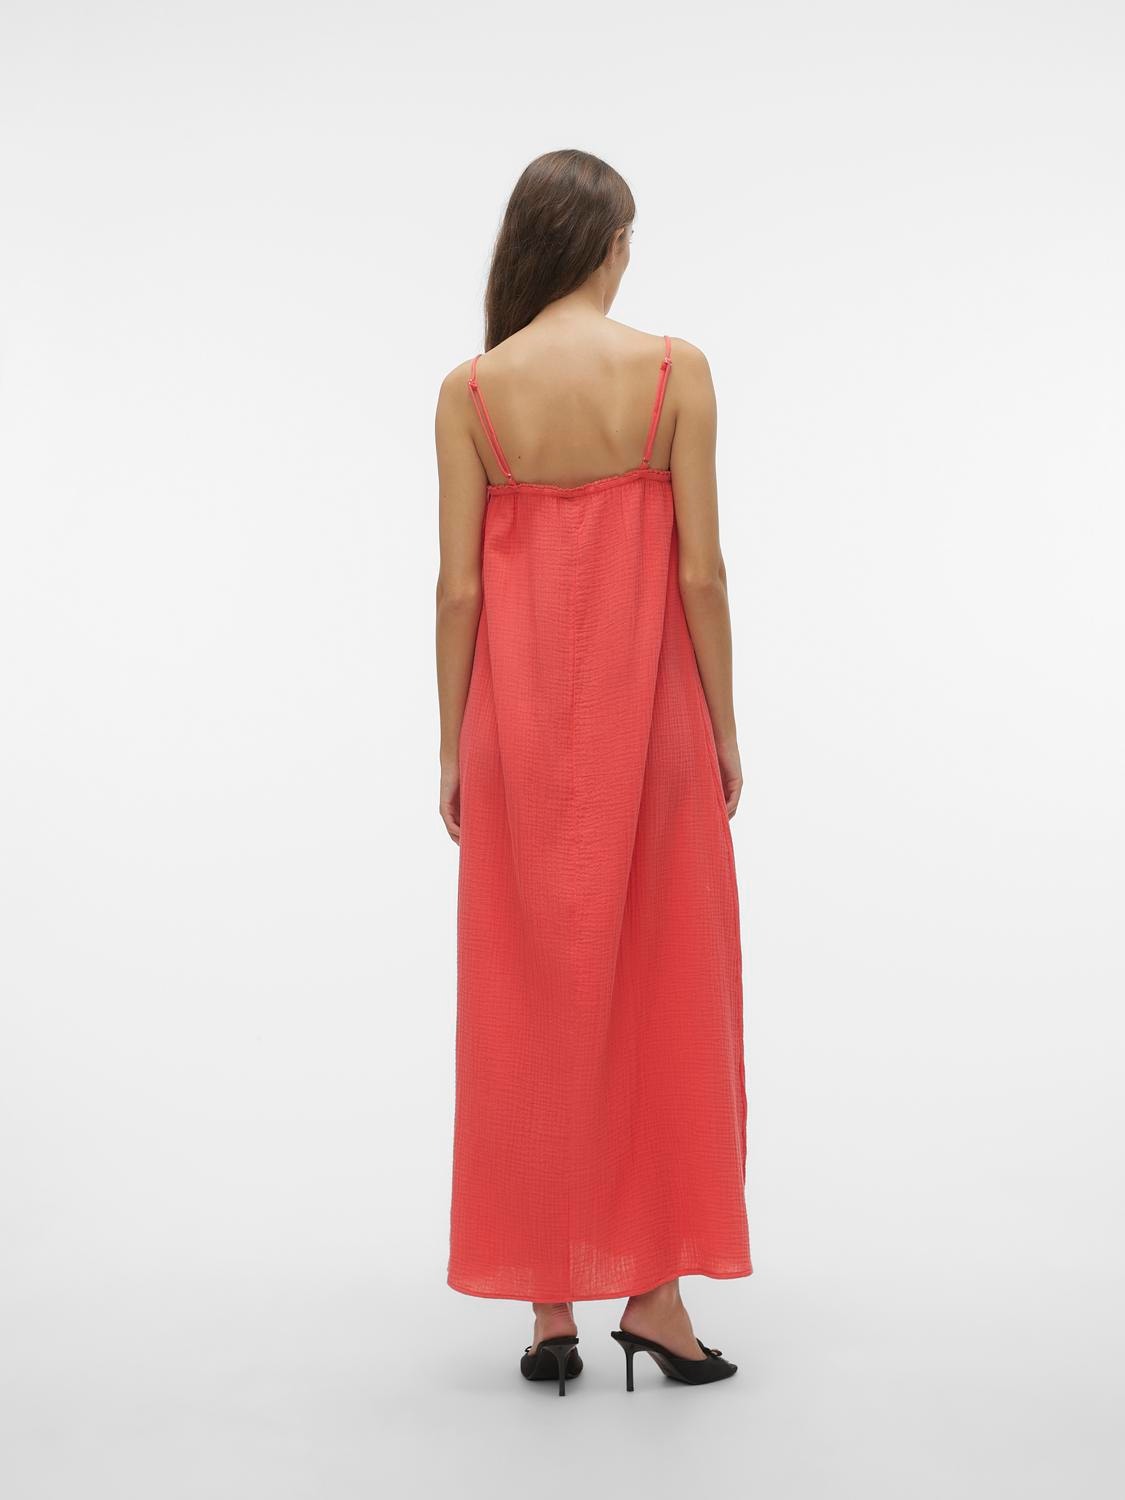 Vero Moda VMNATALI Long dress -Cayenne - 10303704